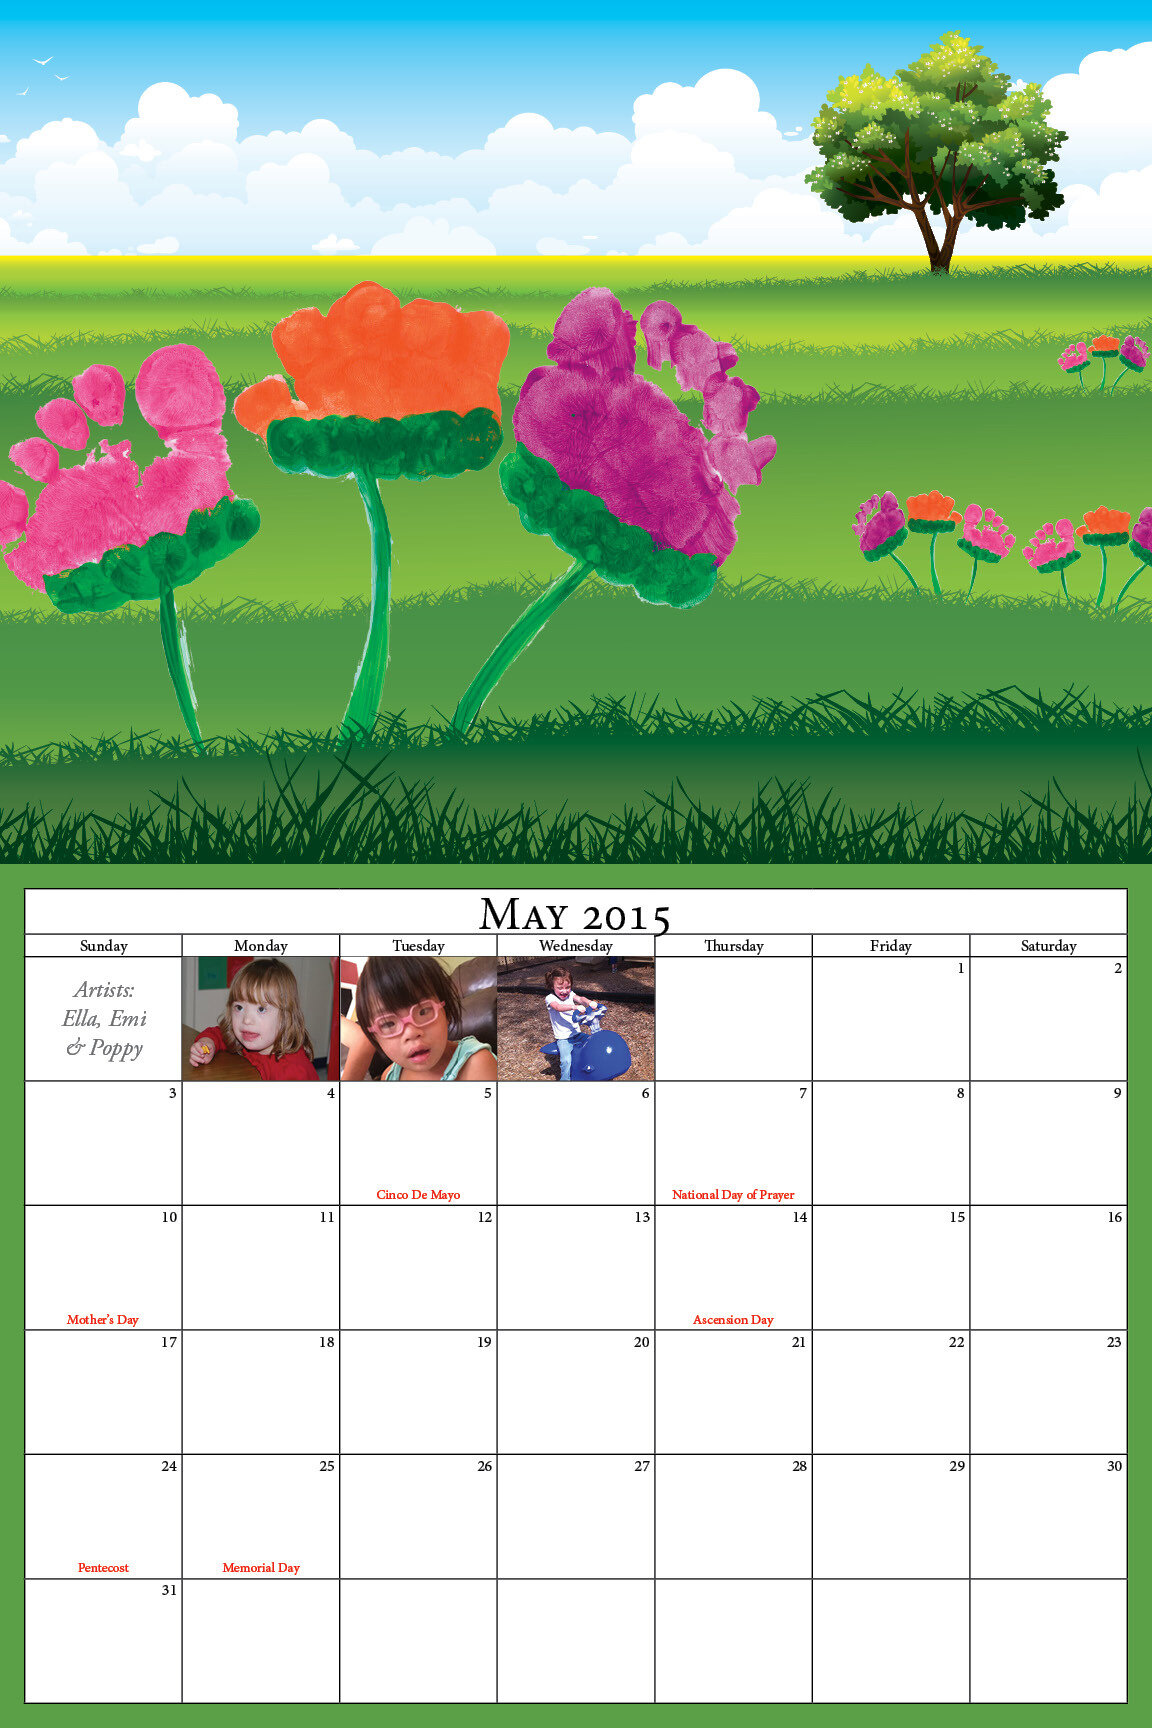 Frankie Lemmon School calendar design cybergraph6.jpg